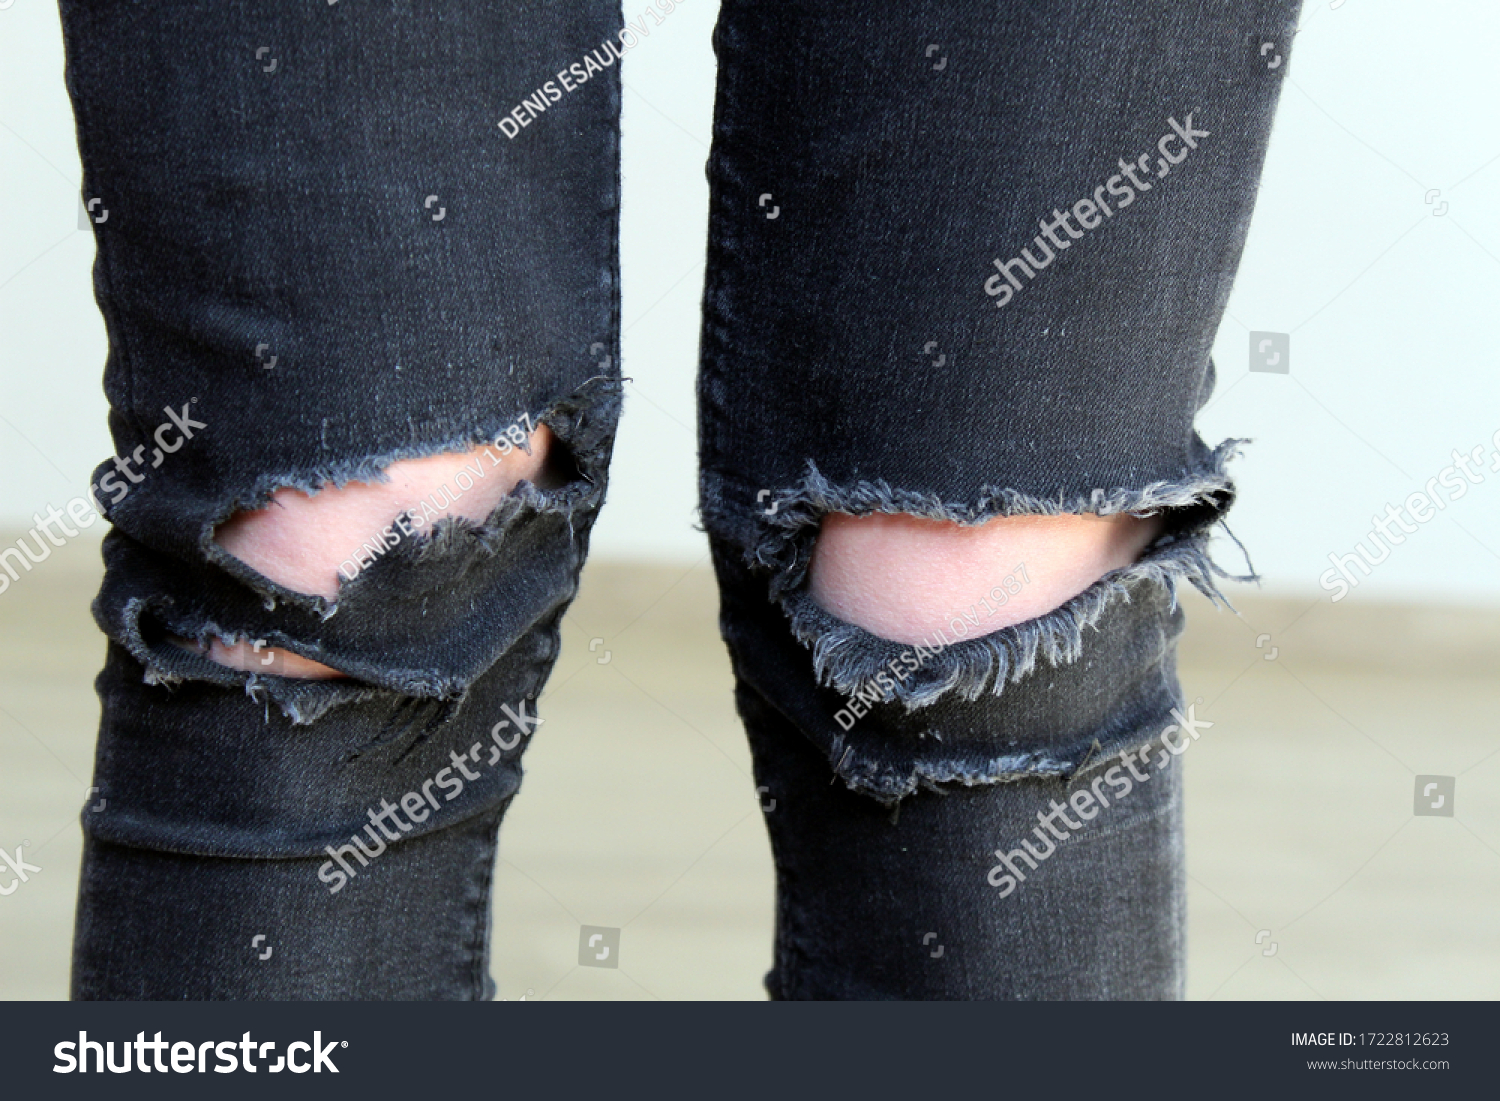 Black Jeans Slits On His Knees Stock Photo 1722812623 | Shutterstock